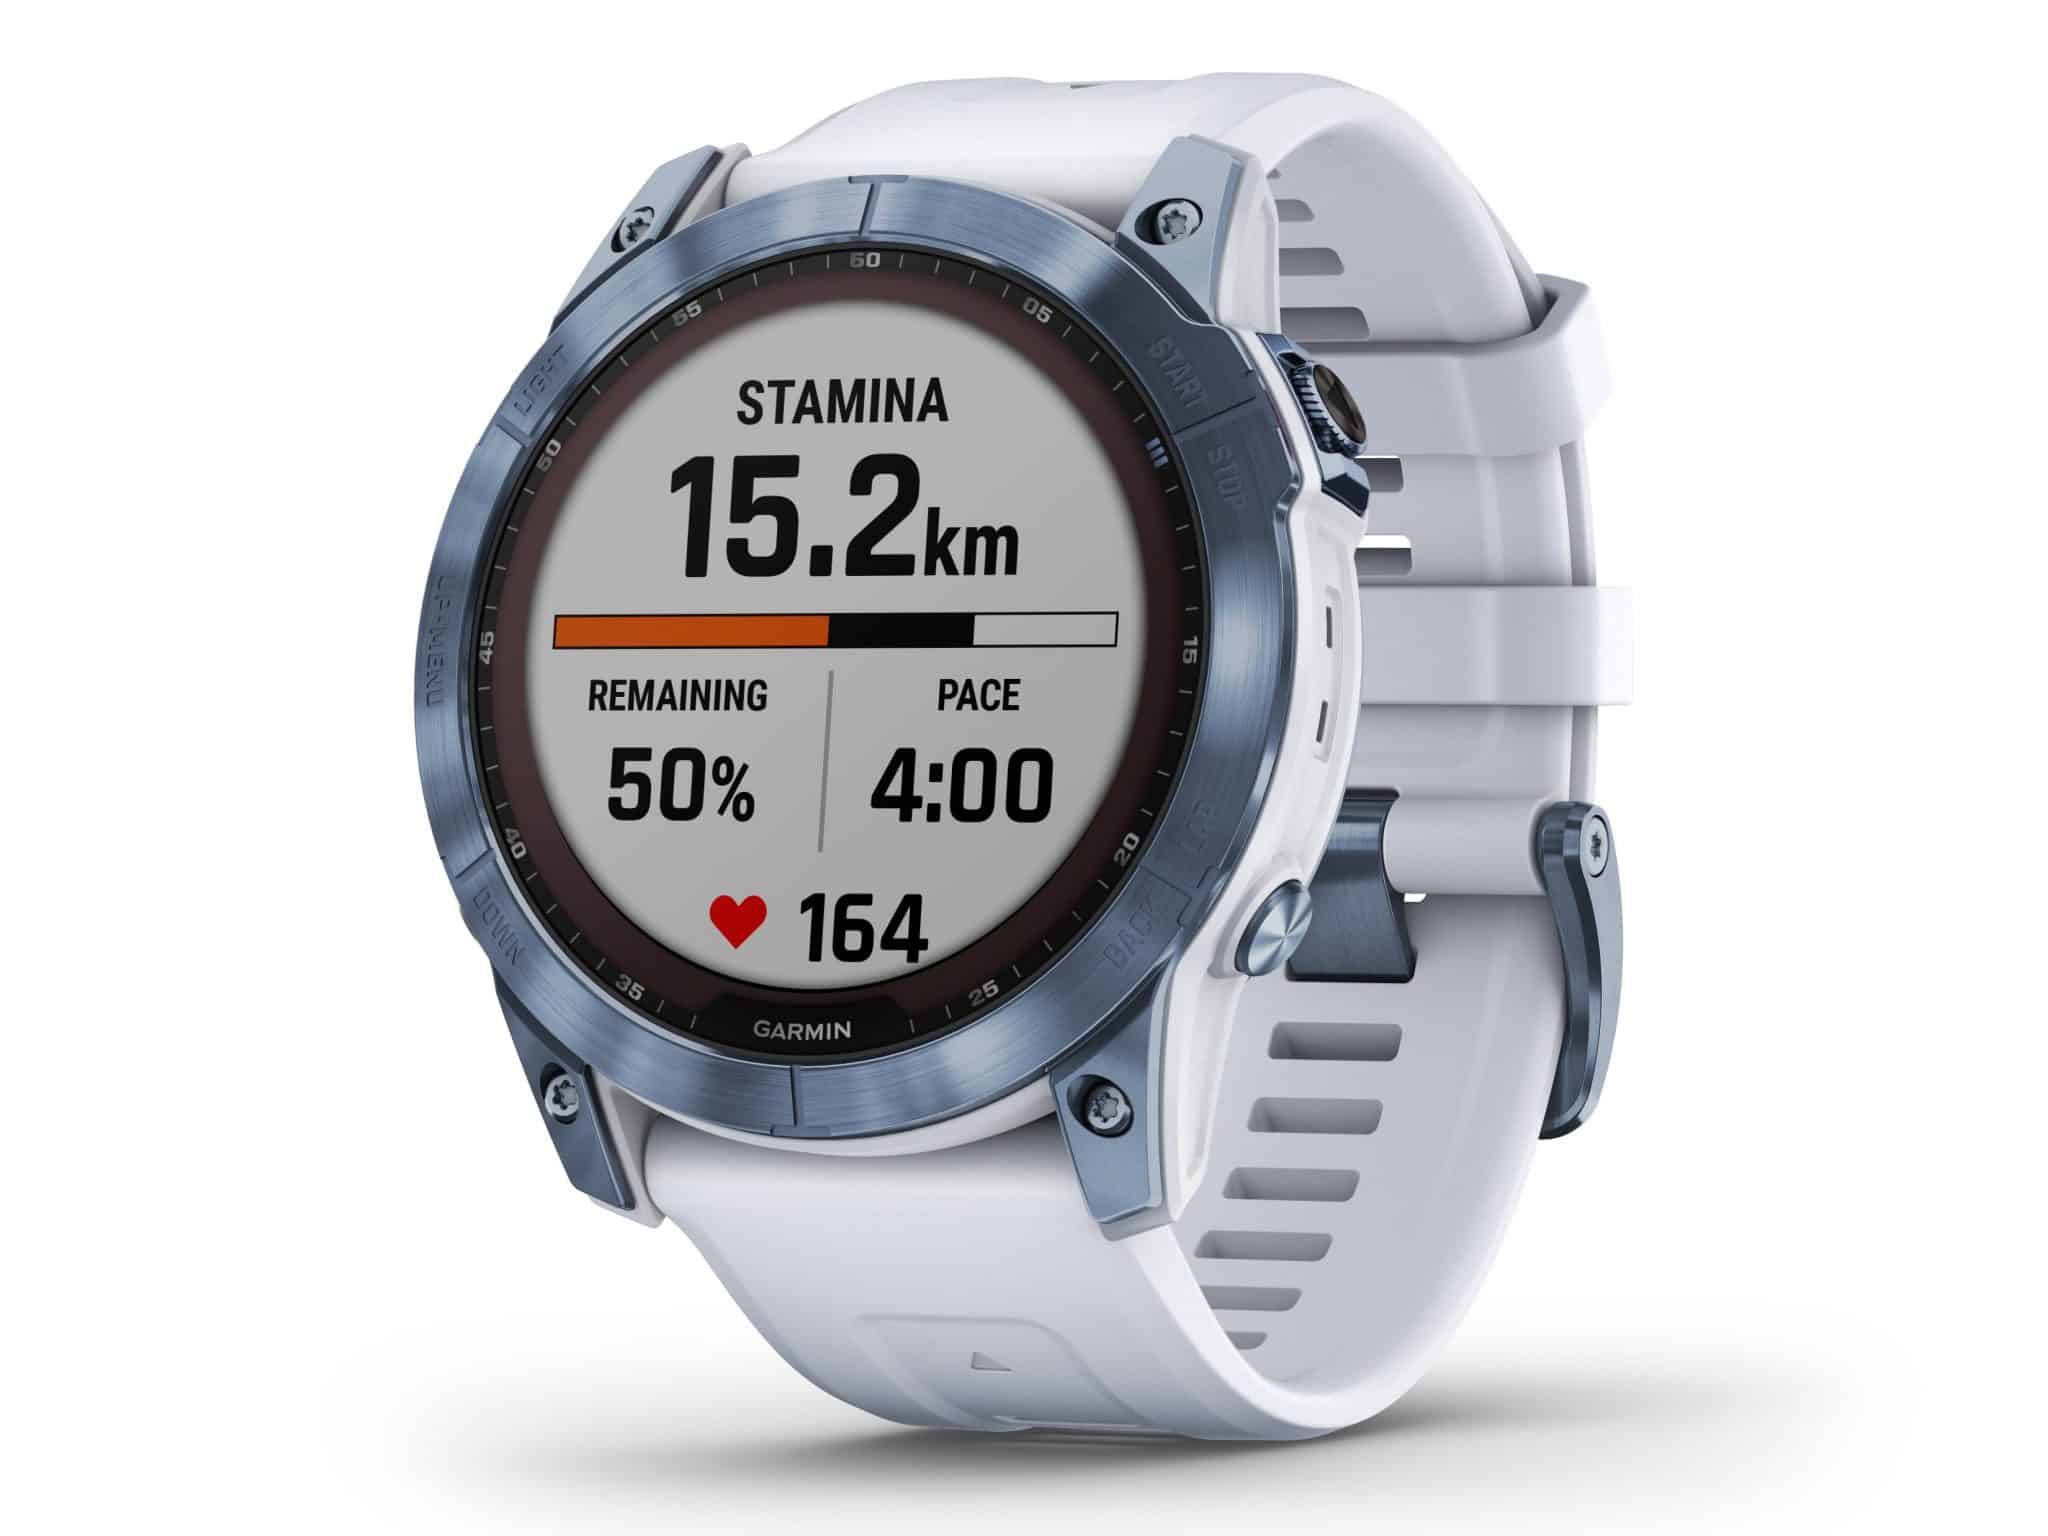 Garmin fenix 7 test: experiences - sports smartwatch for adventurers?